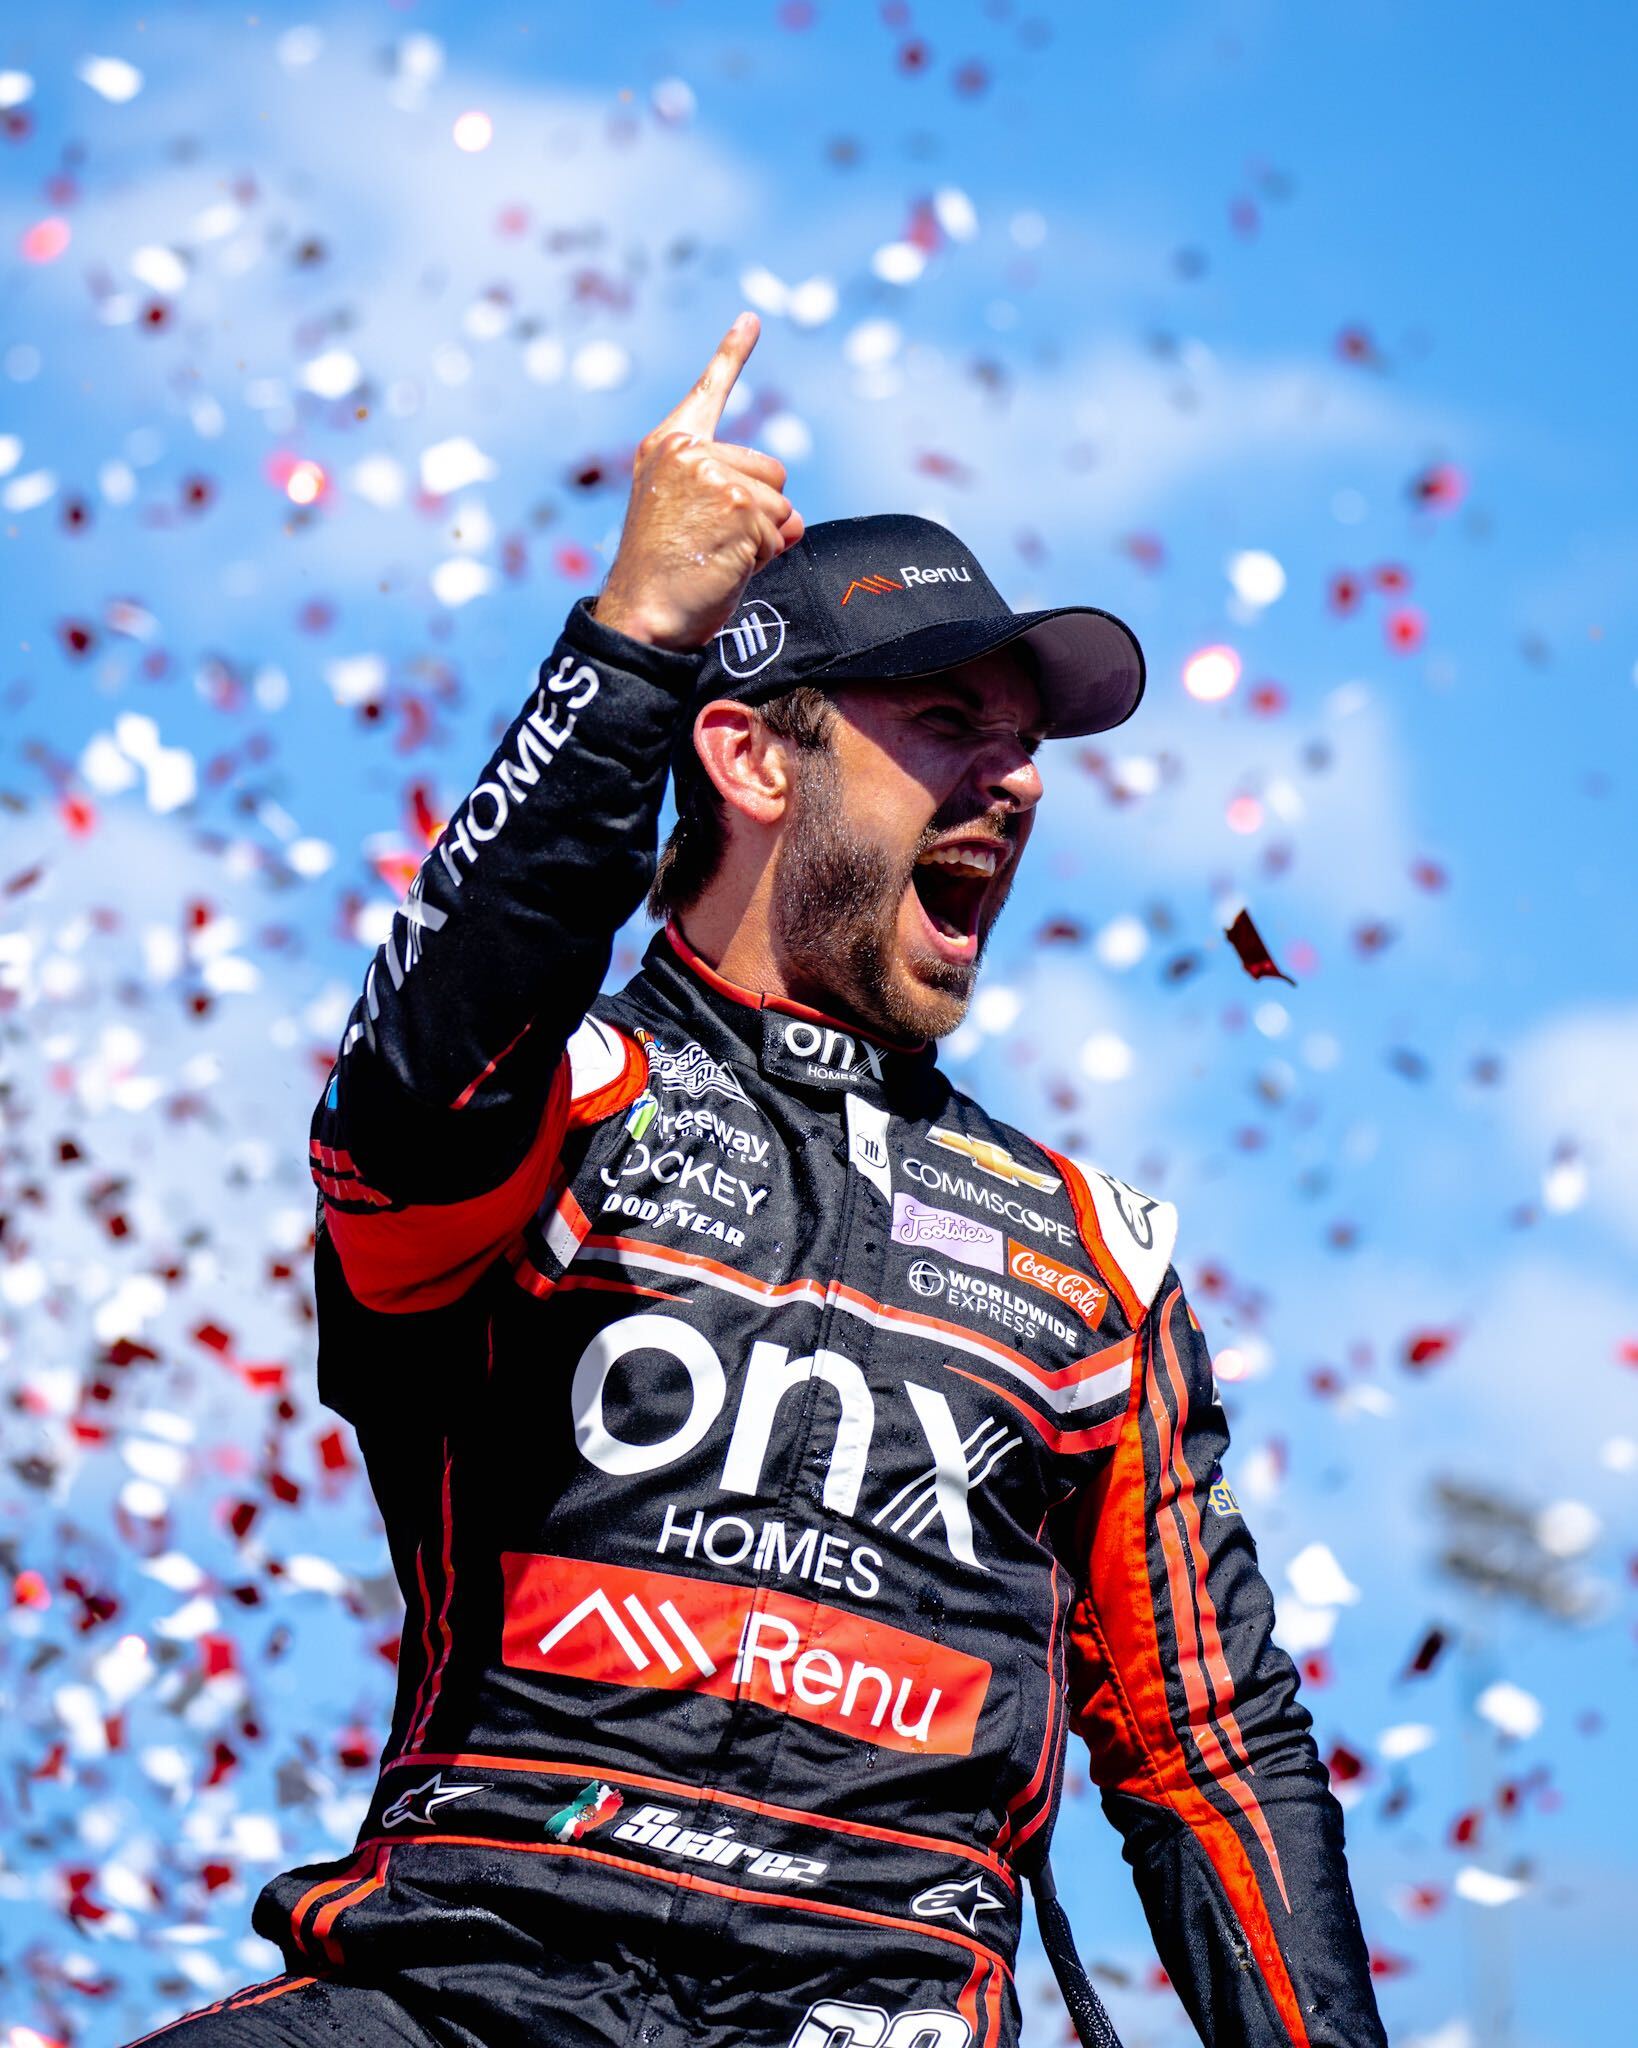 DANIEL SUAREZ MAKES HISTORY AS HE WINS MAIDEN NASCAR CUP RACE AT SONOMA RACEWAY, CALIFORNIA